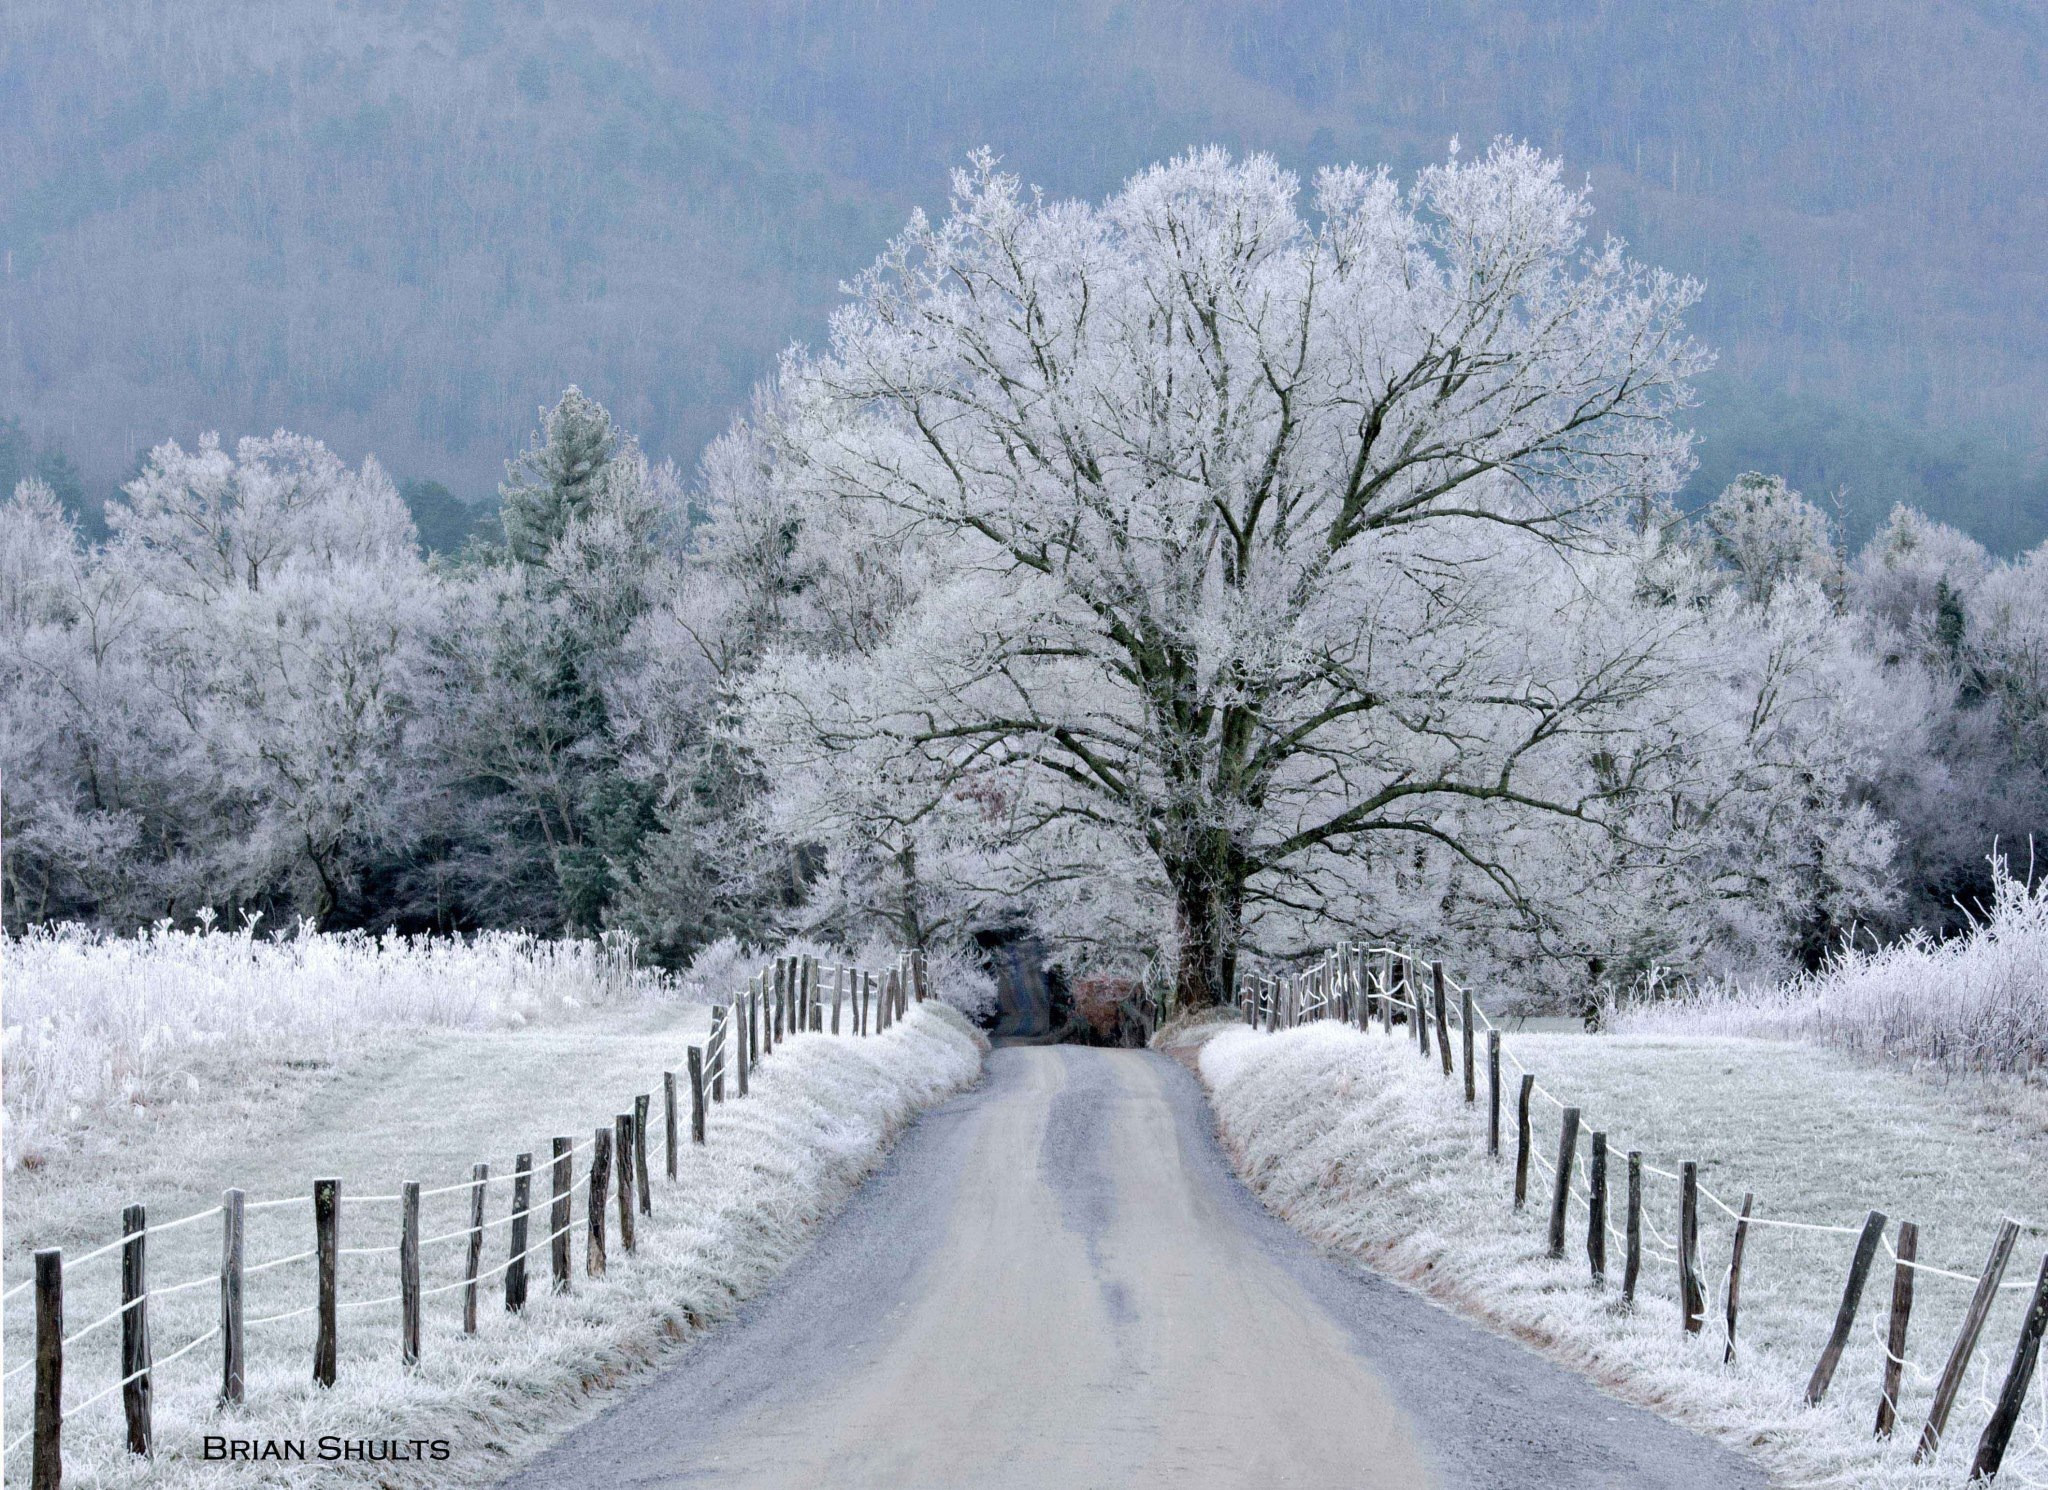 Smoky Mountain Winter Scenes Wallpaper (42+ images)